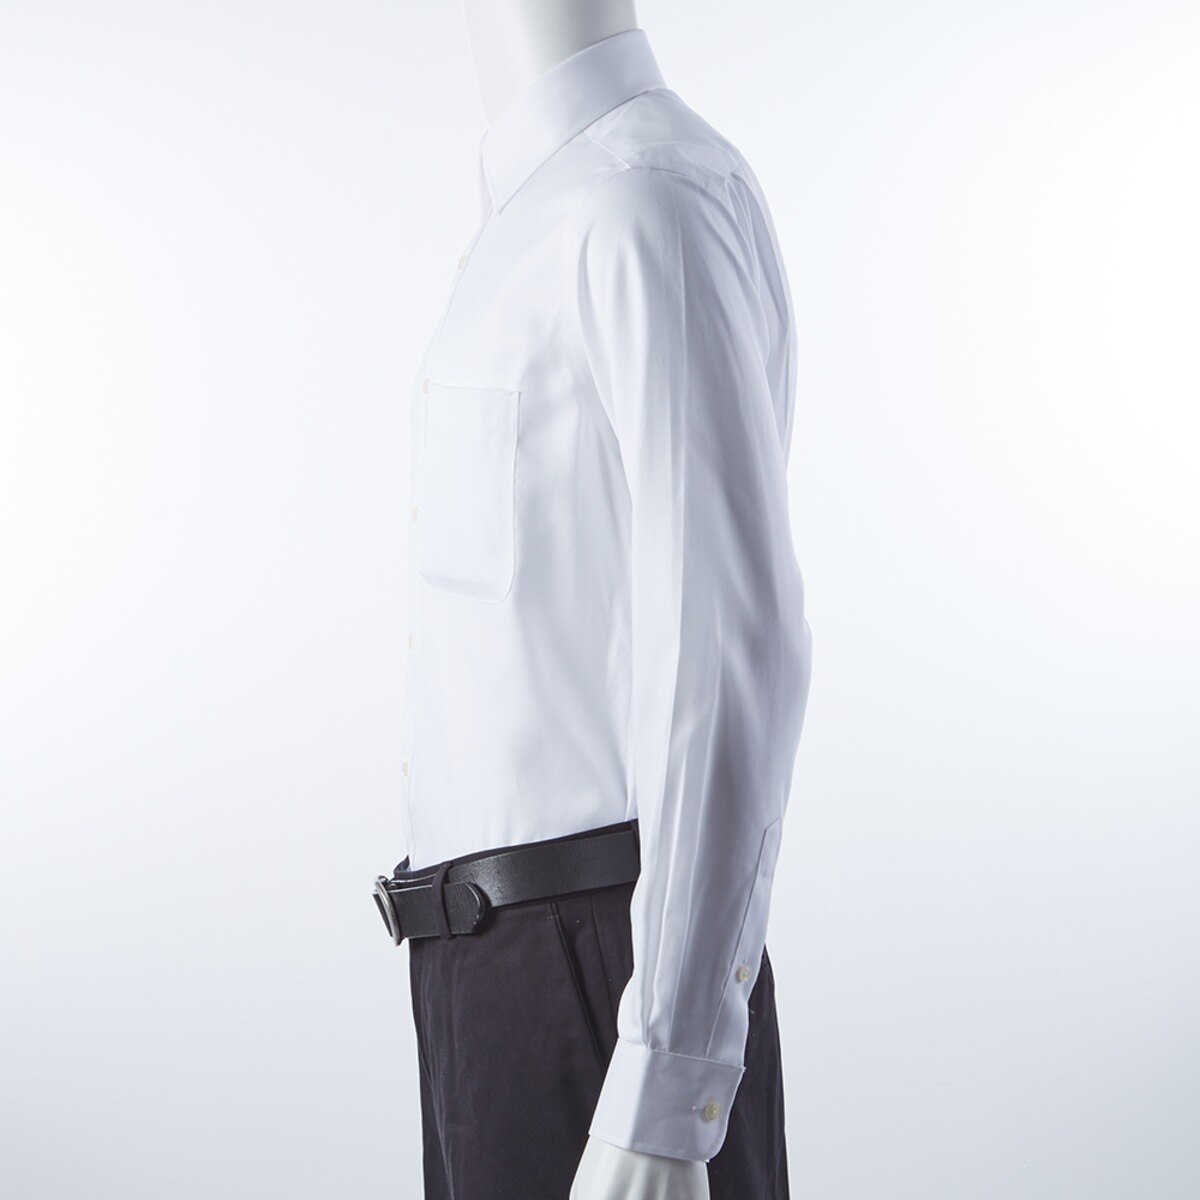 Kirkland Signature 科克蘭 男長袖標準領免燙襯衫 白色 領圍 16吋 X 袖長 34/35吋